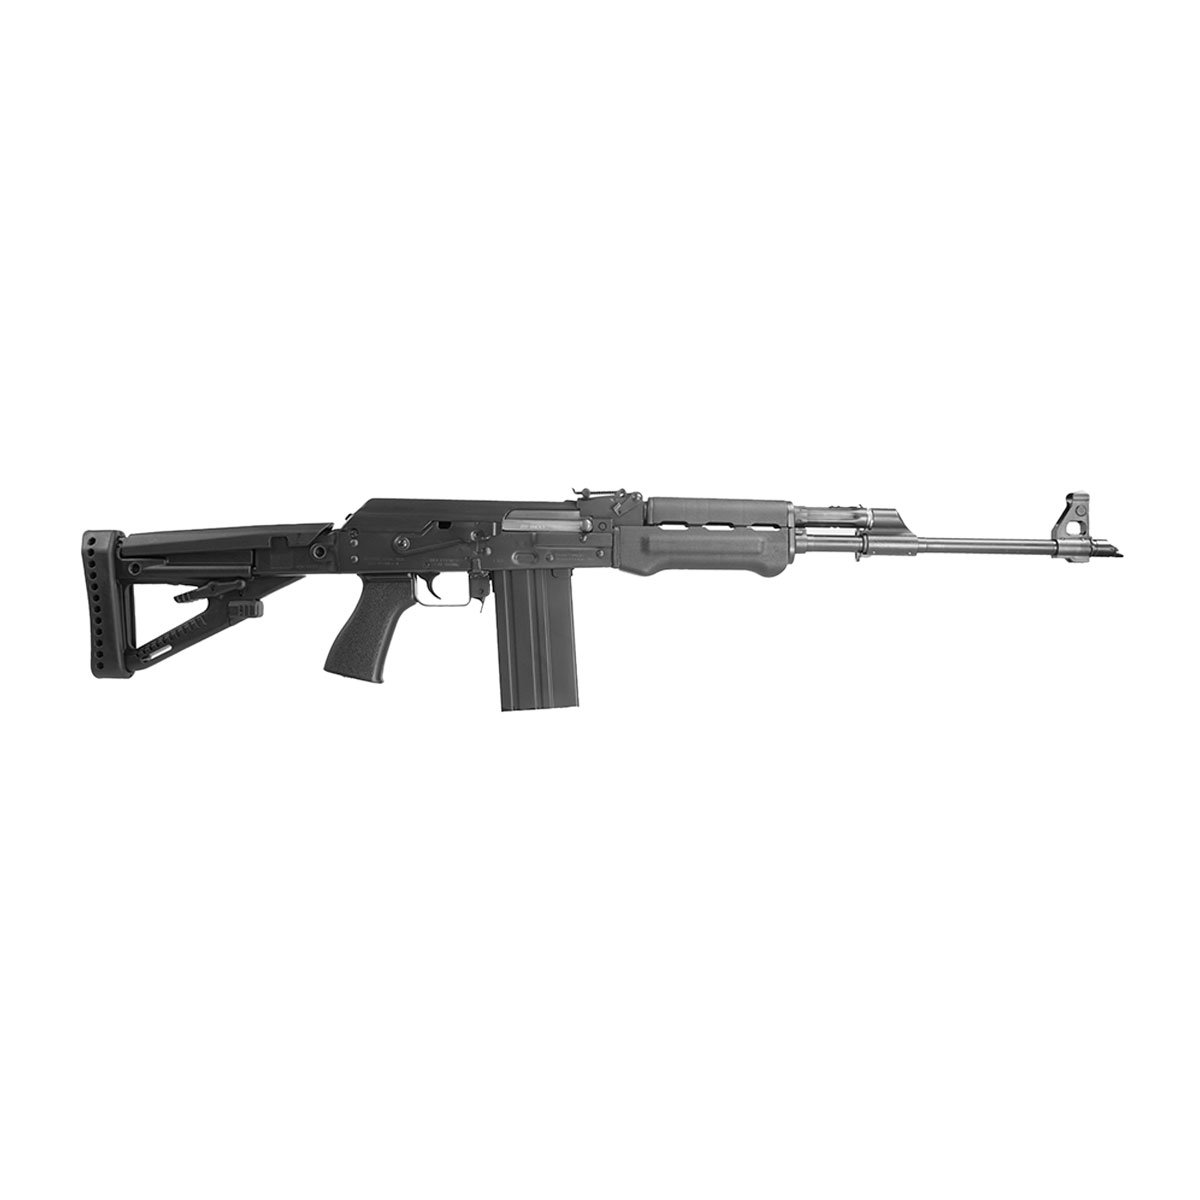 ZASTAVA ARMS USA - PAP M77 308 WINCHESTER AK RIFLE